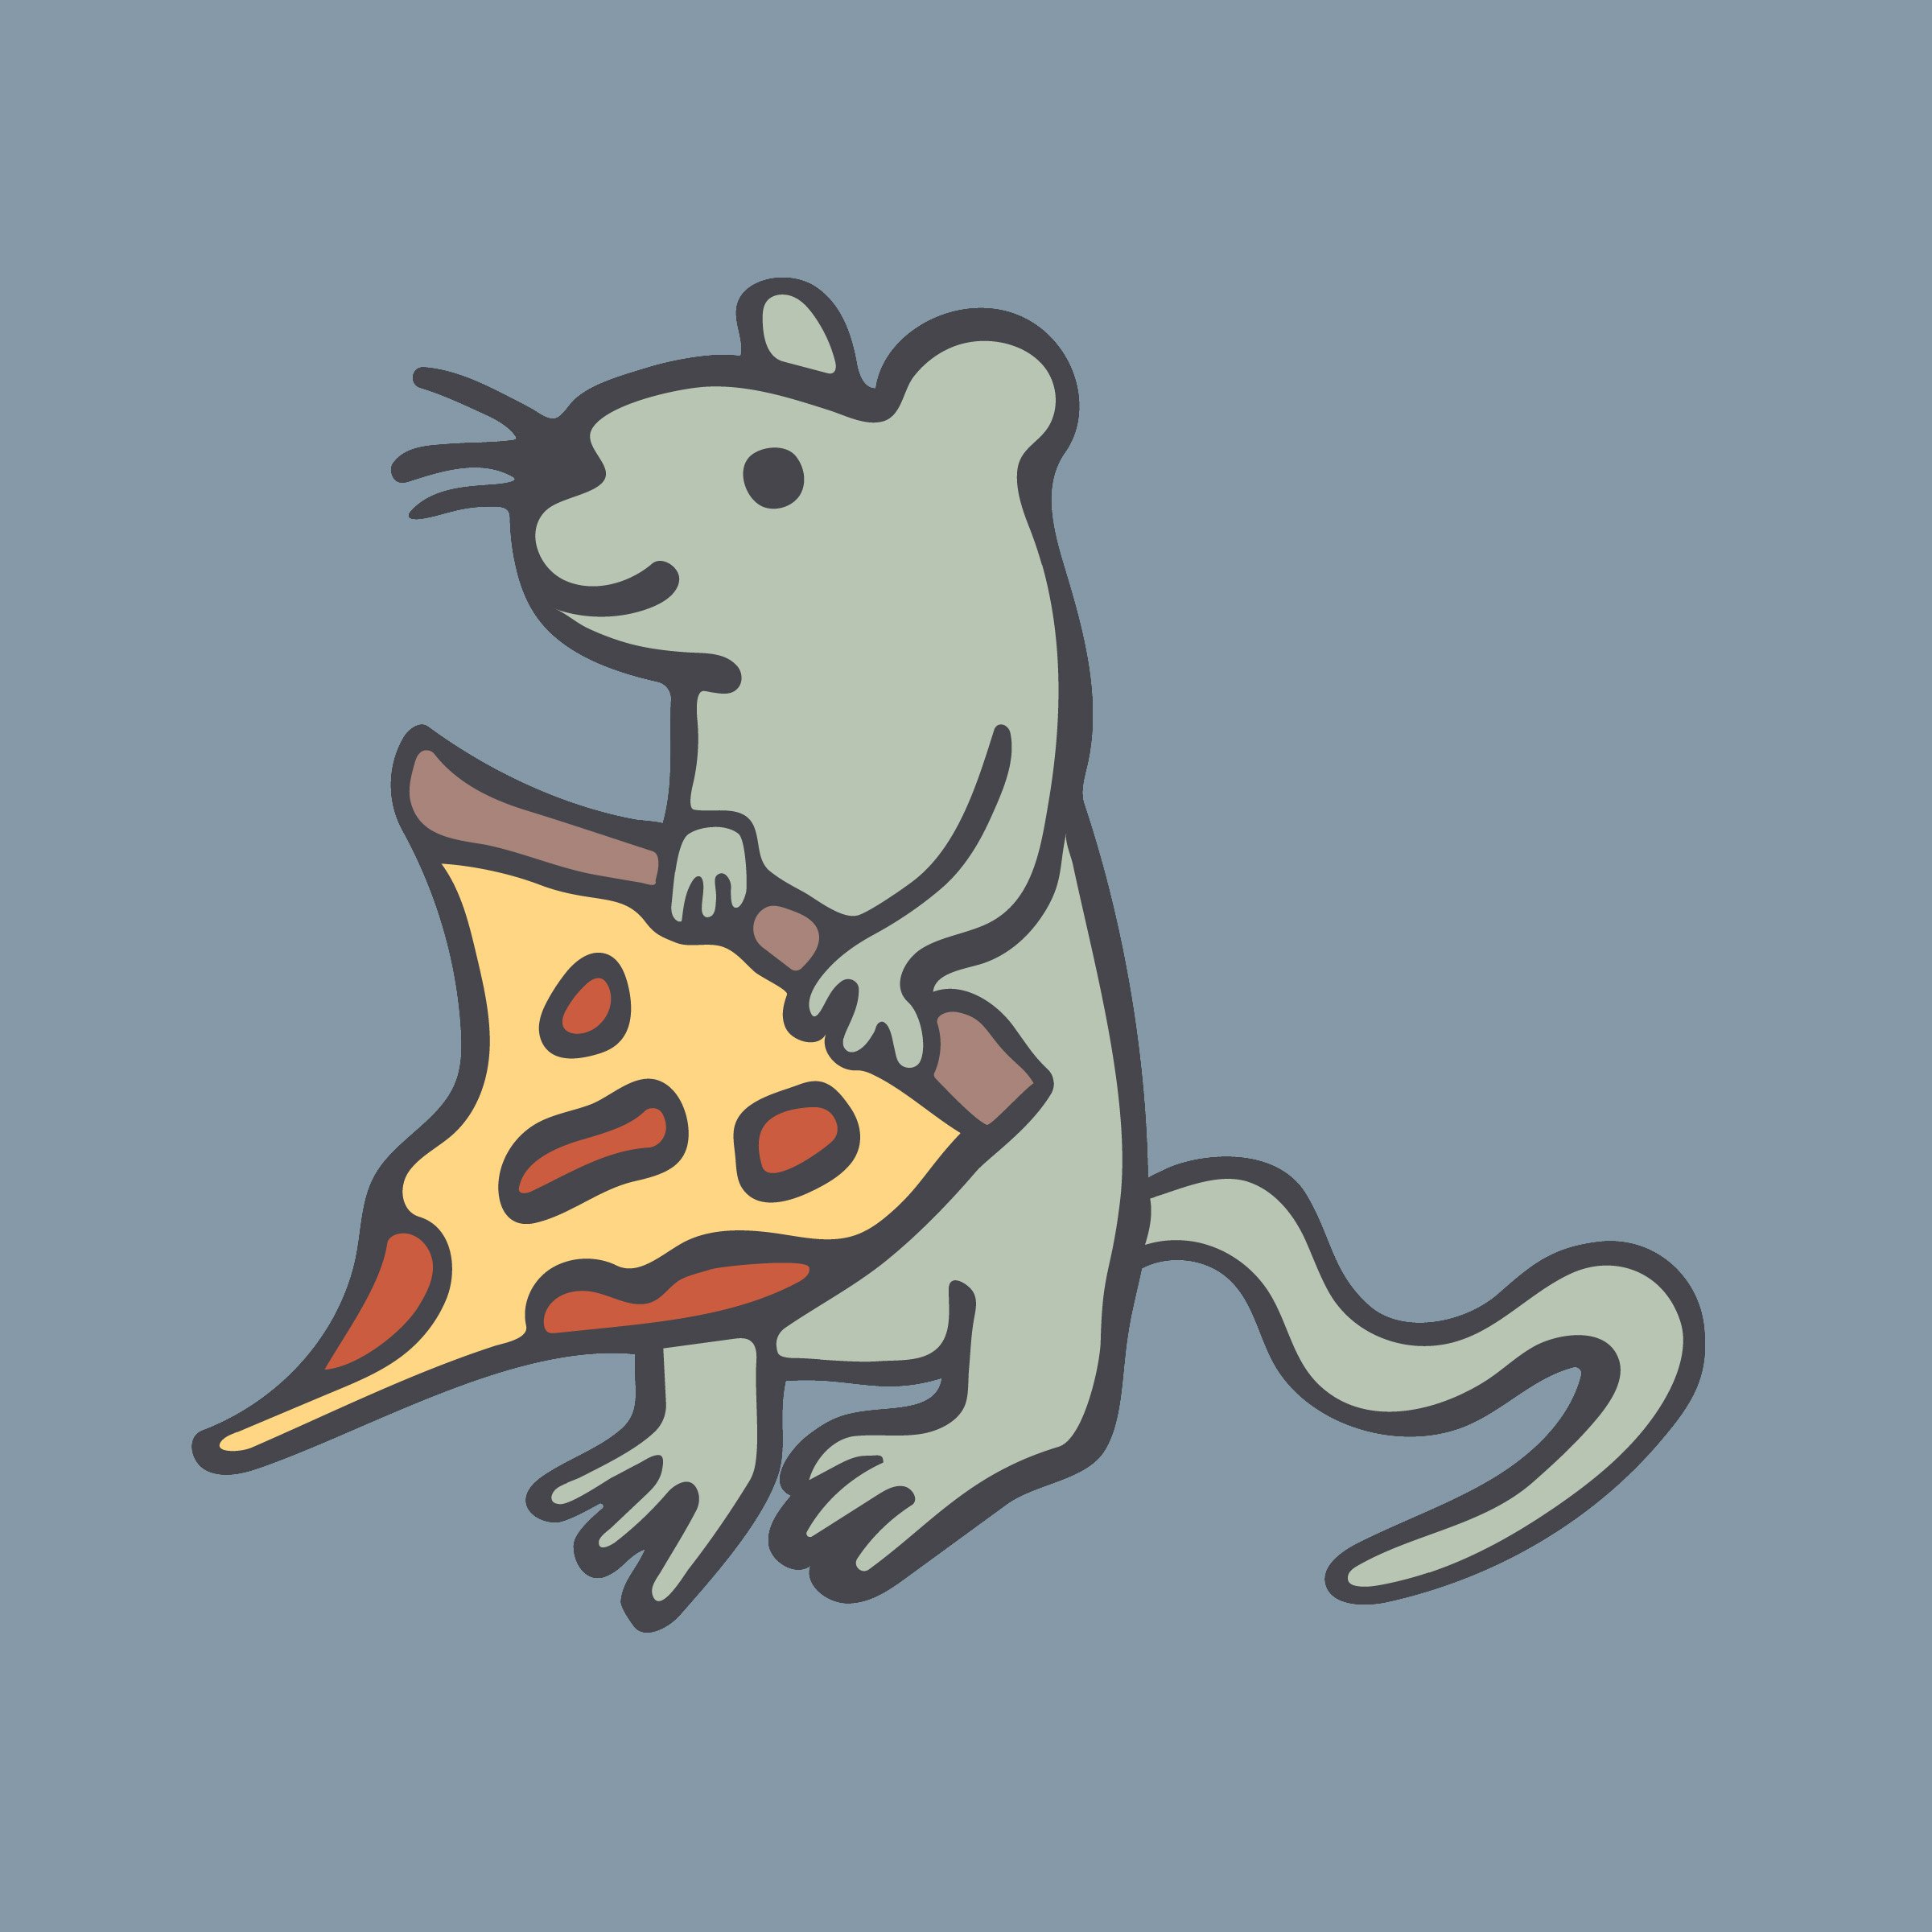 Piza Rat Print.jpg